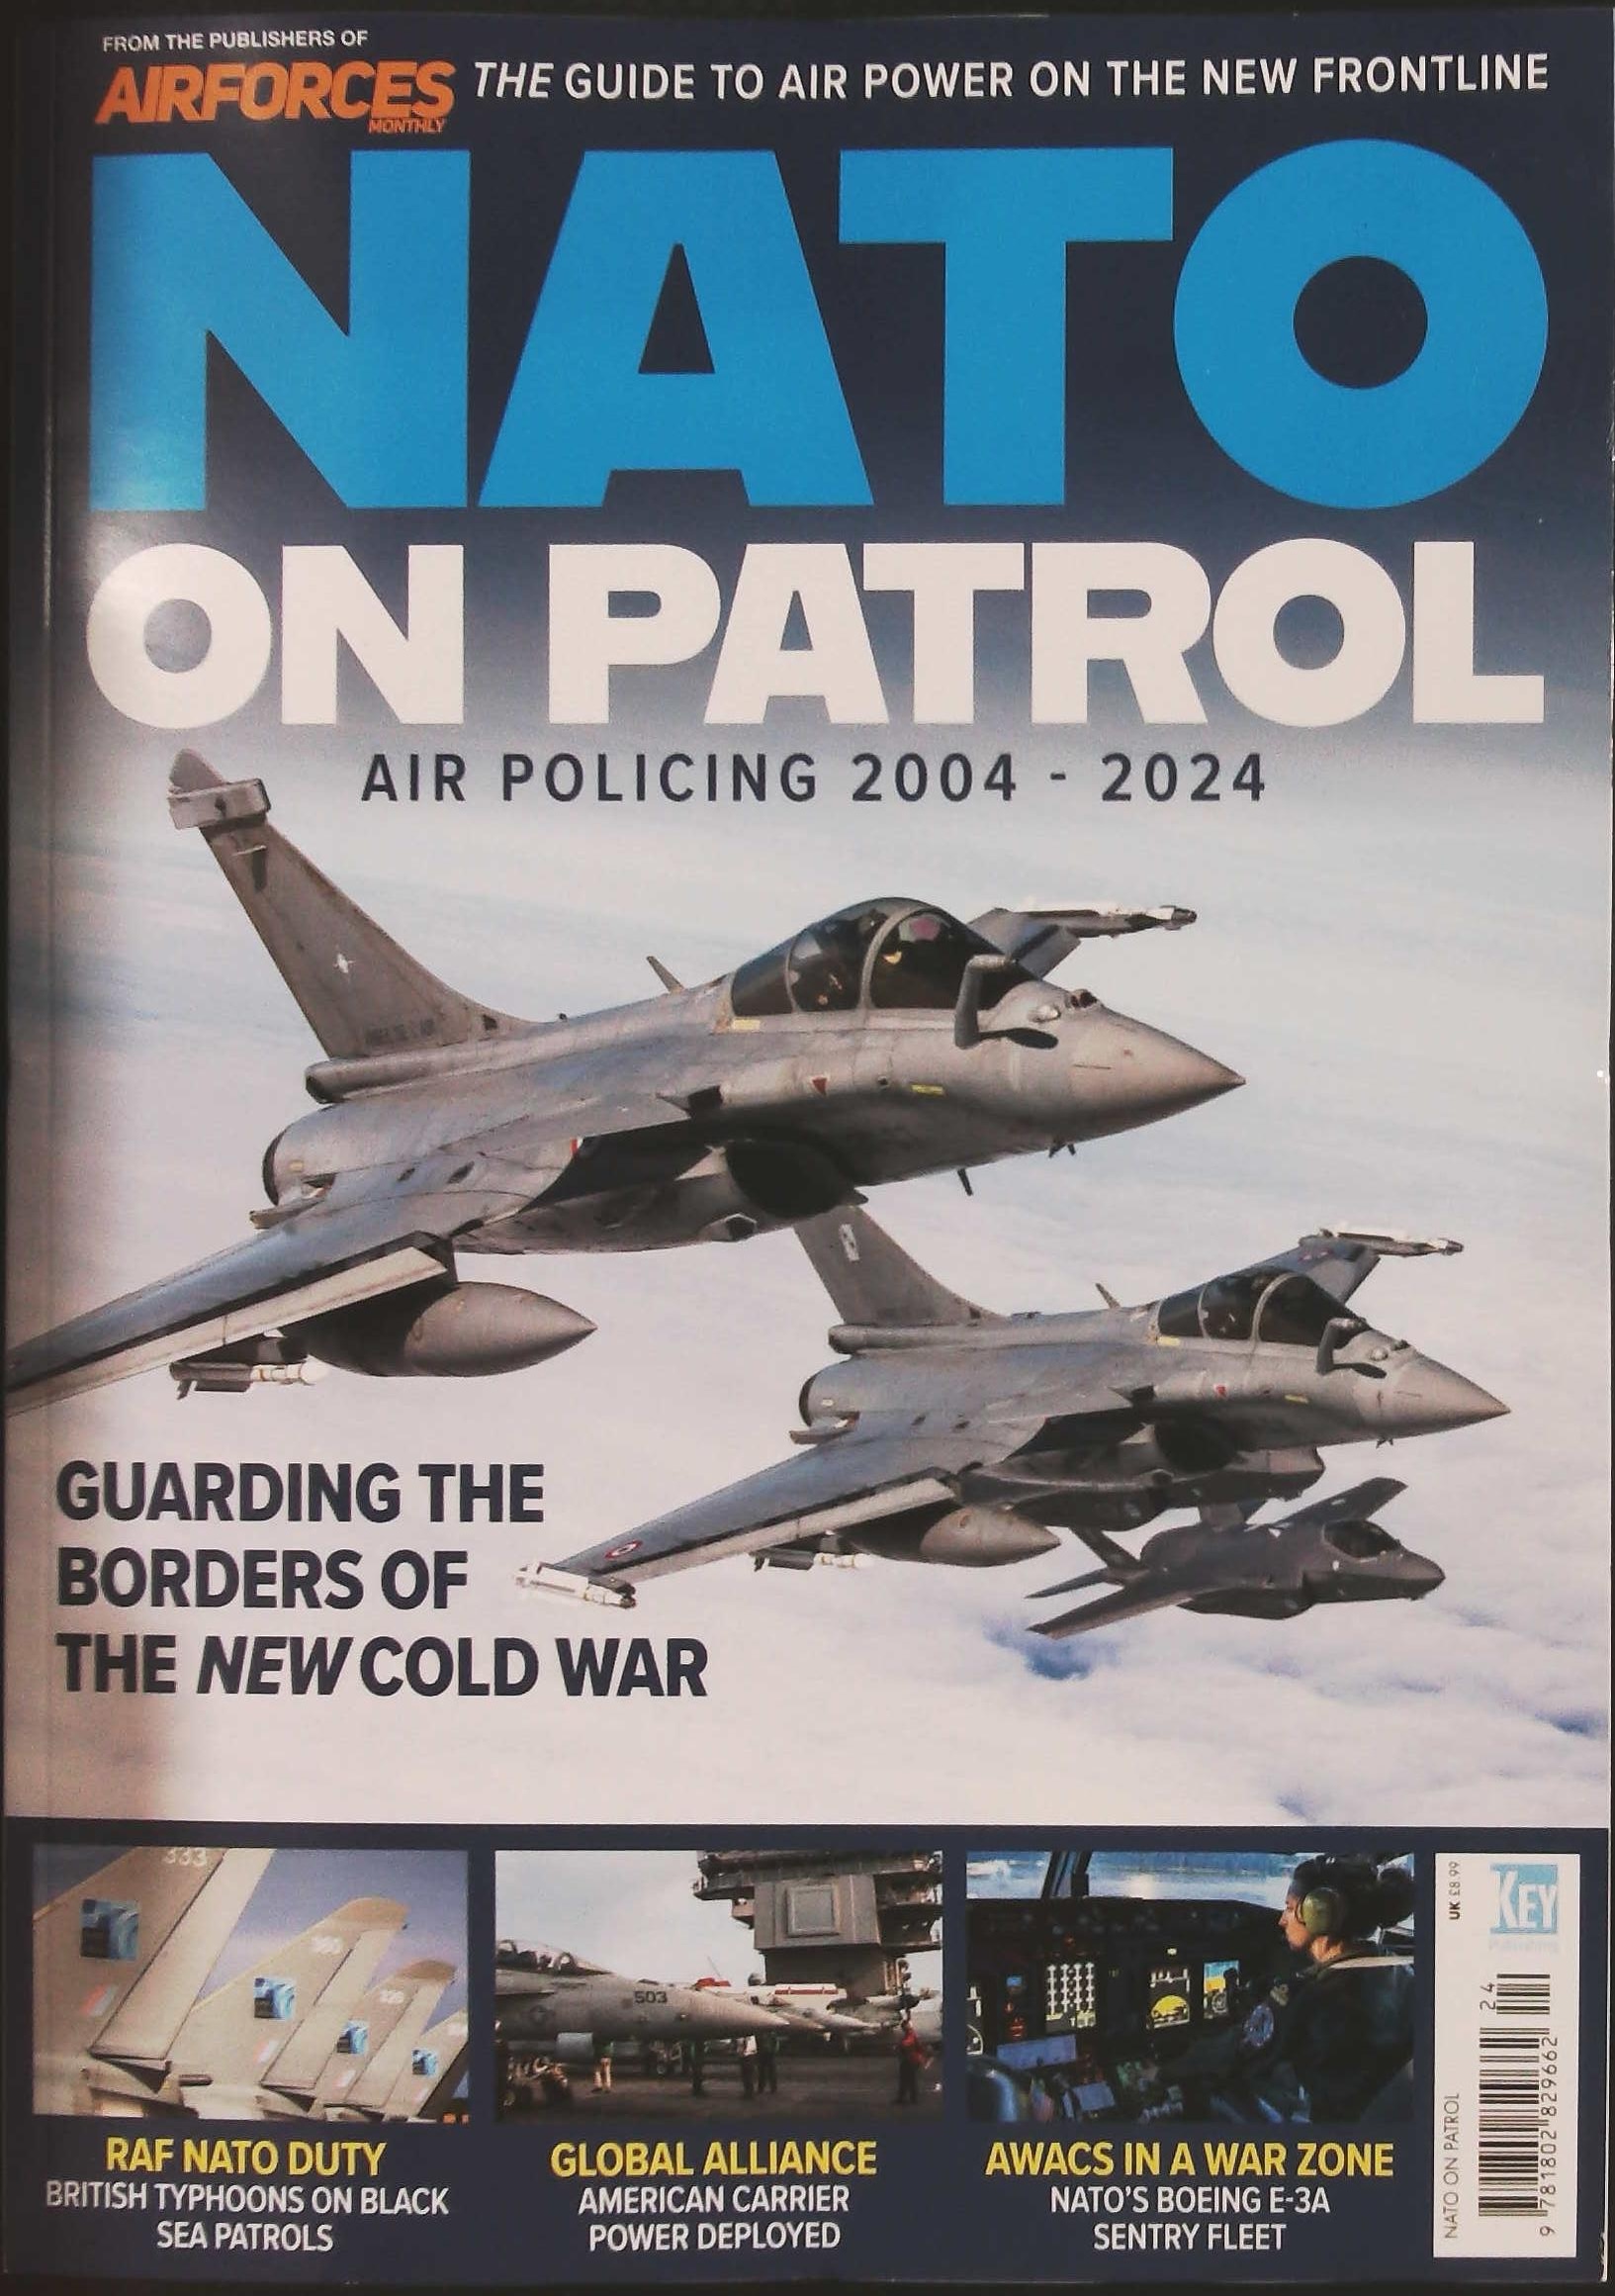 NATO ON PATROL